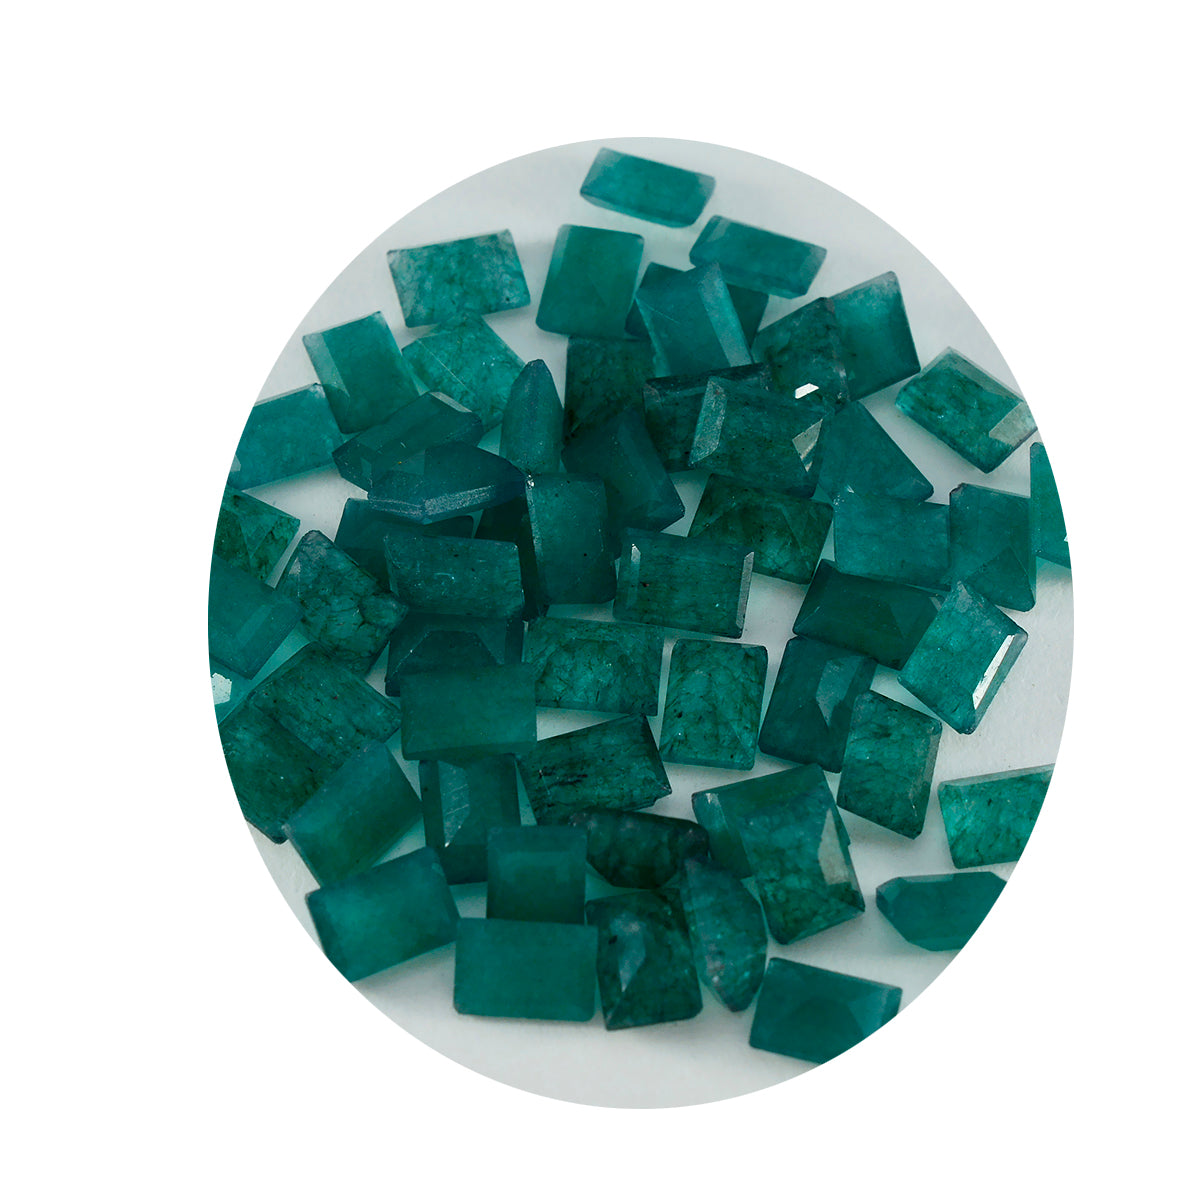 riyogems 1 шт. натуральная зеленая яшма граненая 6x8 мм восьмиугольная форма красивый качественный камень